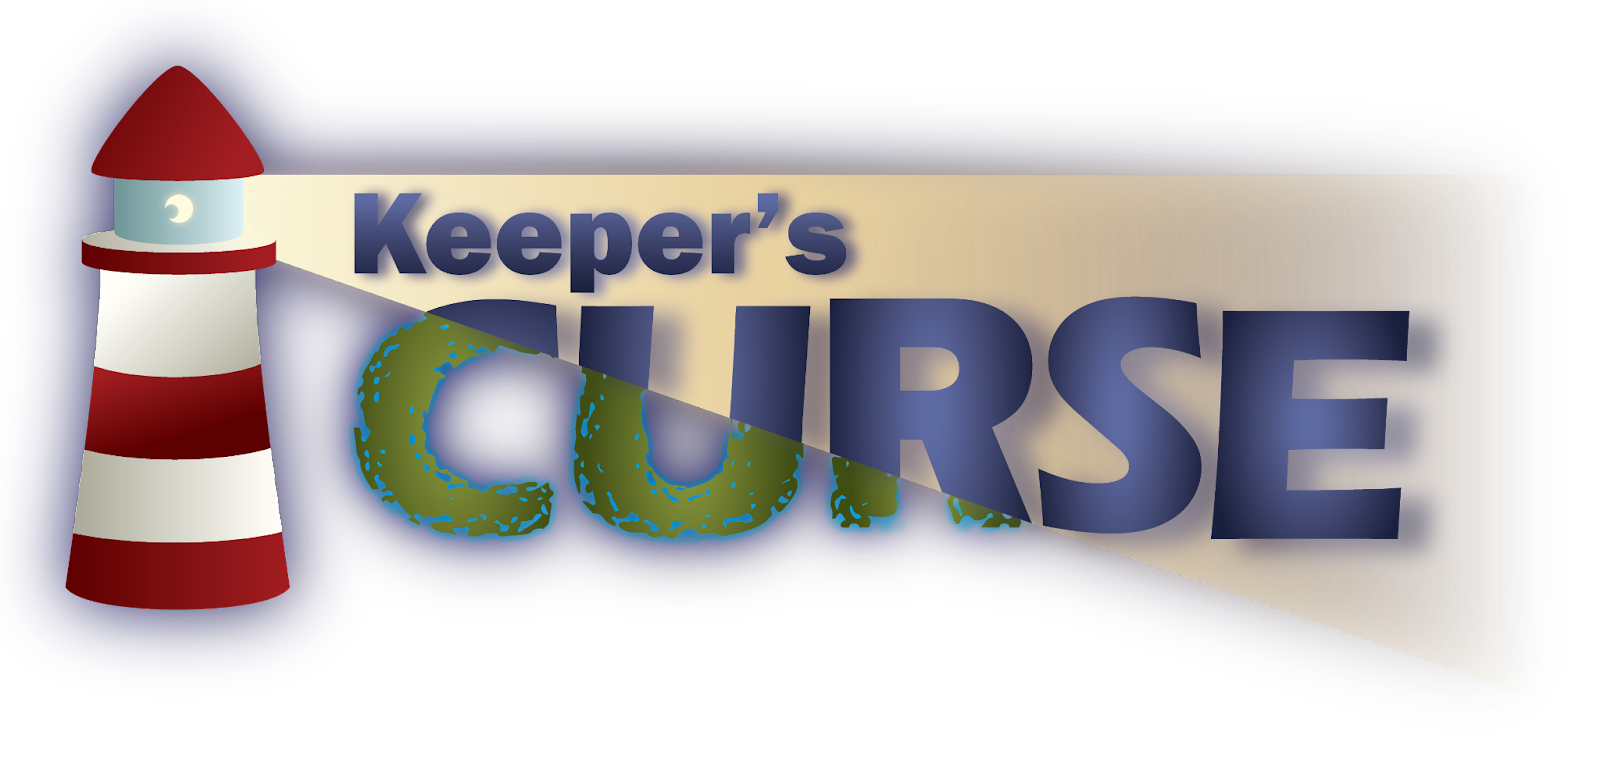 Keeper's Curse